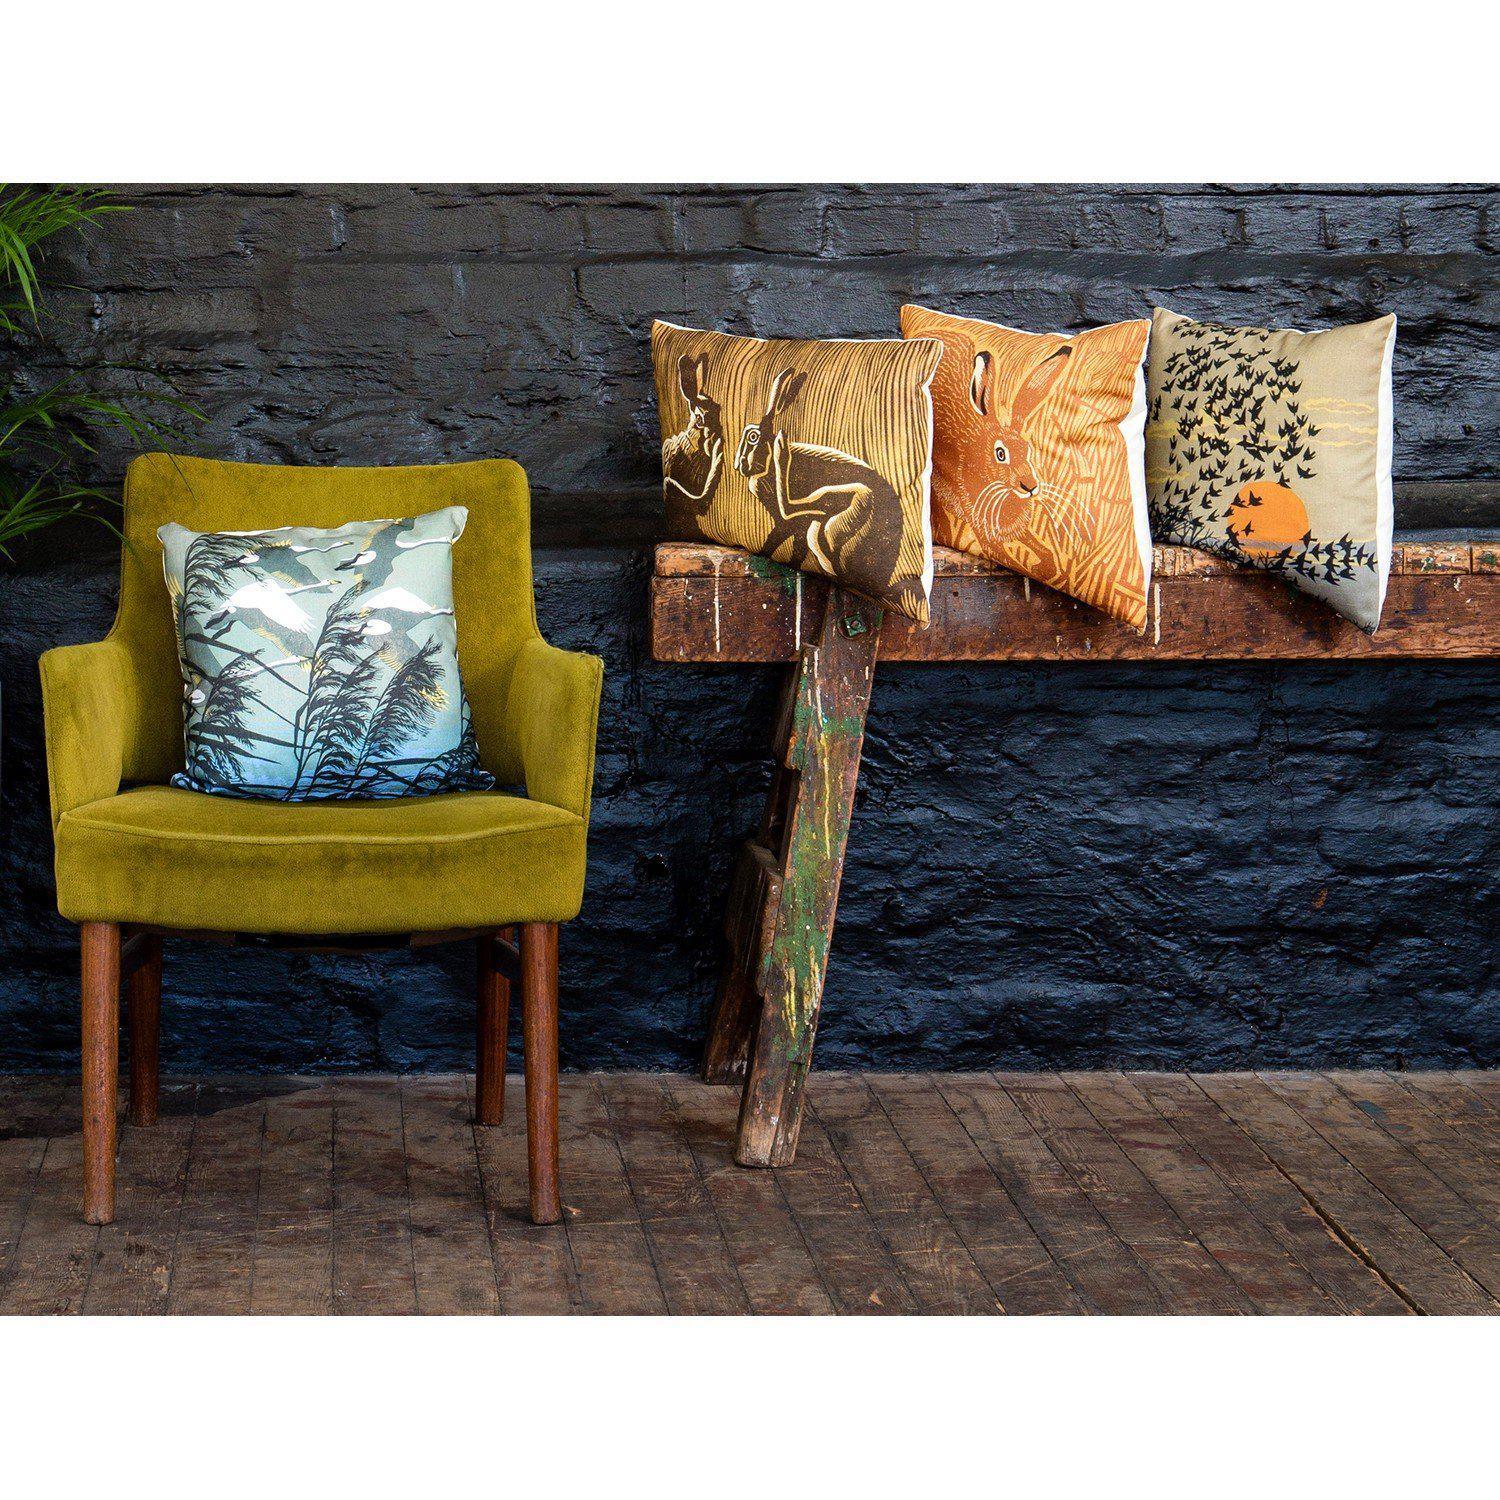 Blackthorn Blackbird - Robert Gillmor Cushion - Handmade Cushions UK - WeLoveCushions